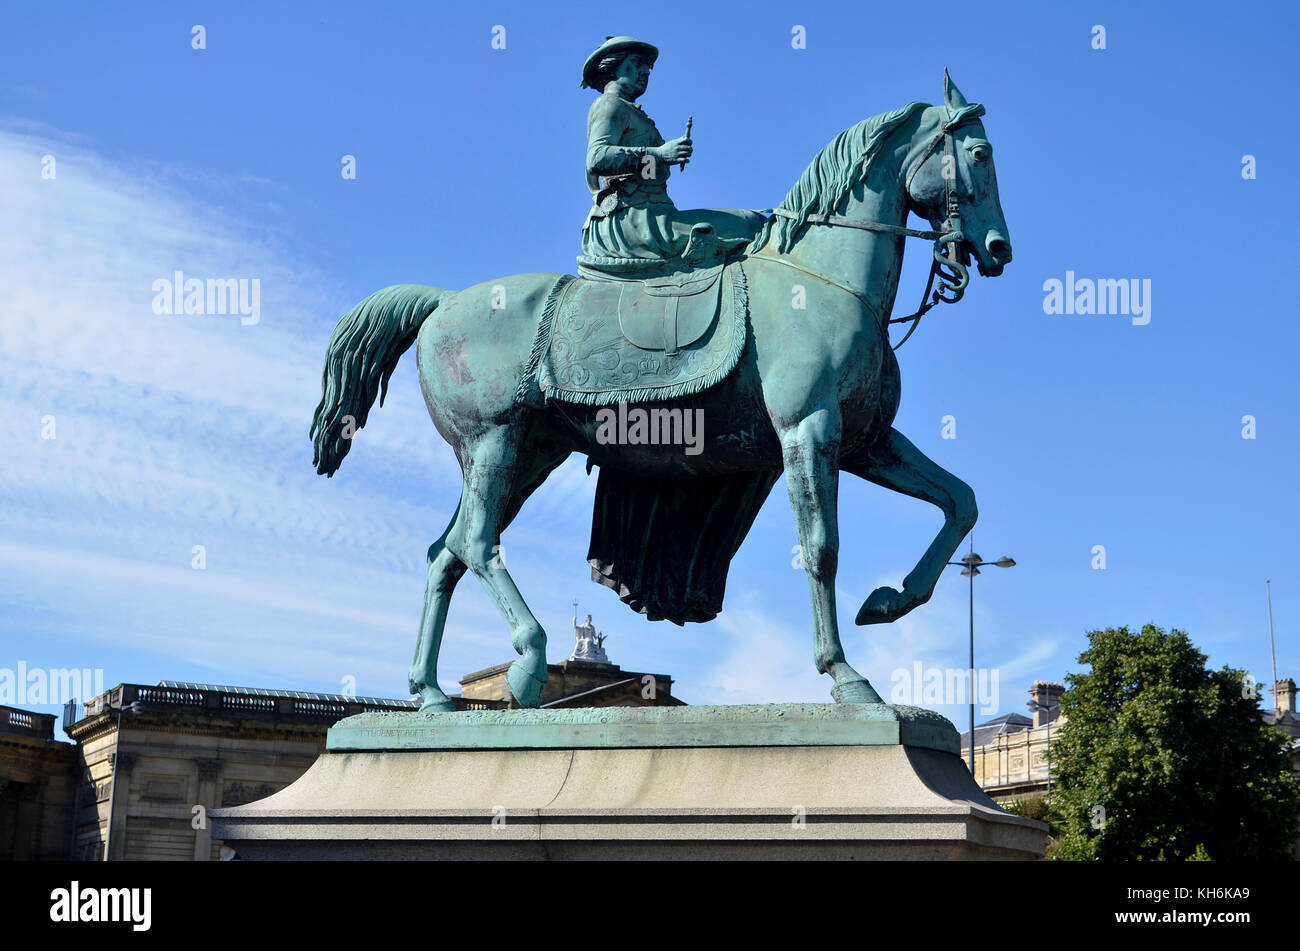 Queen Victoria statue, St. George's Hall, Liverpool, UK. Stock Photo